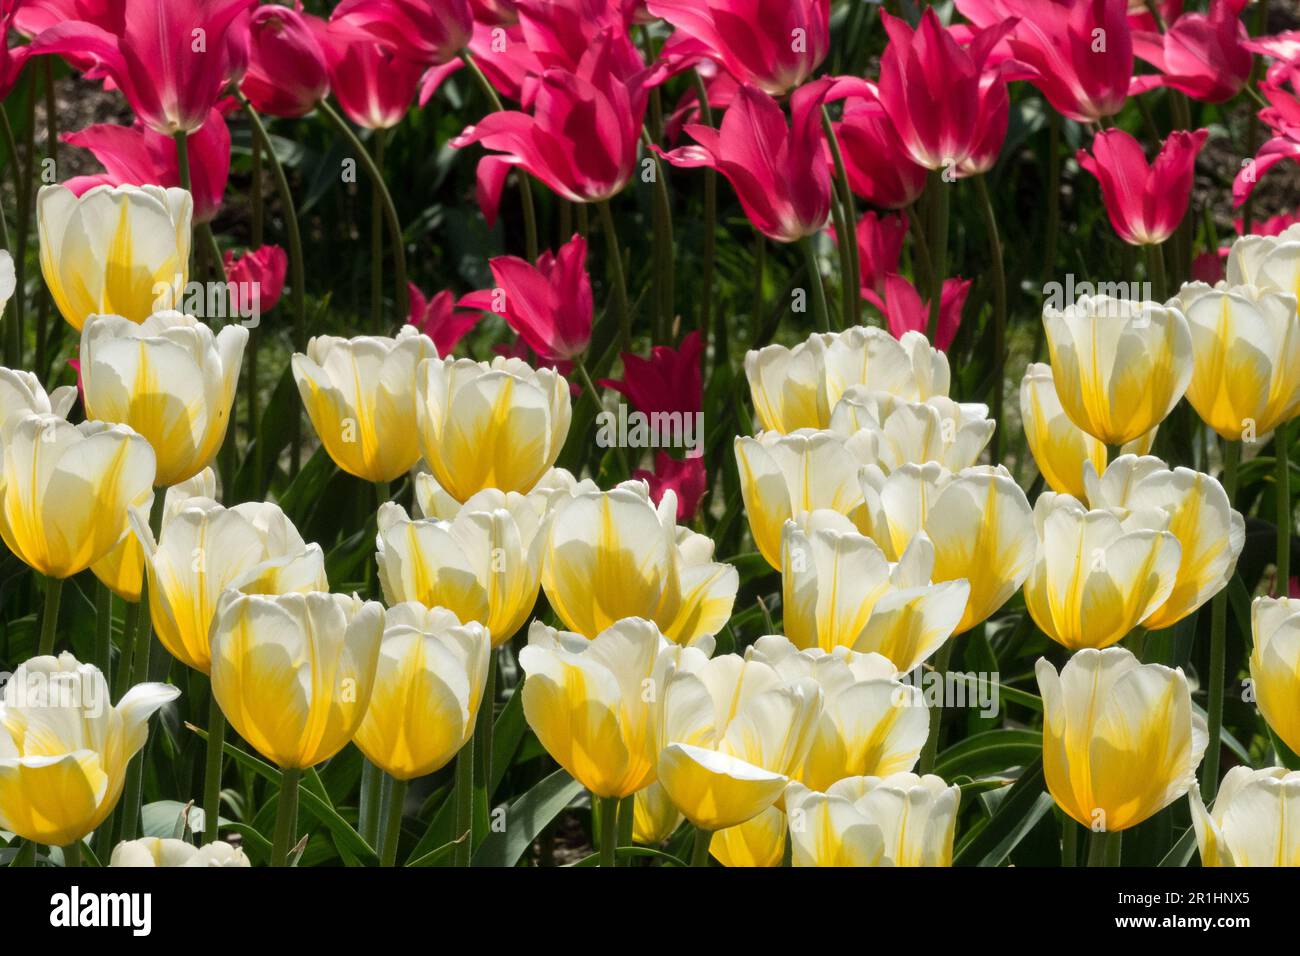 White Yellow Tulip 'Lemon Chiffon' Deep Rose Pink Tulip 'Mariette' Tulips Garden Display Flower Bed Mixed Flowers Group Triumph Blooming Flowerbed Stock Photo